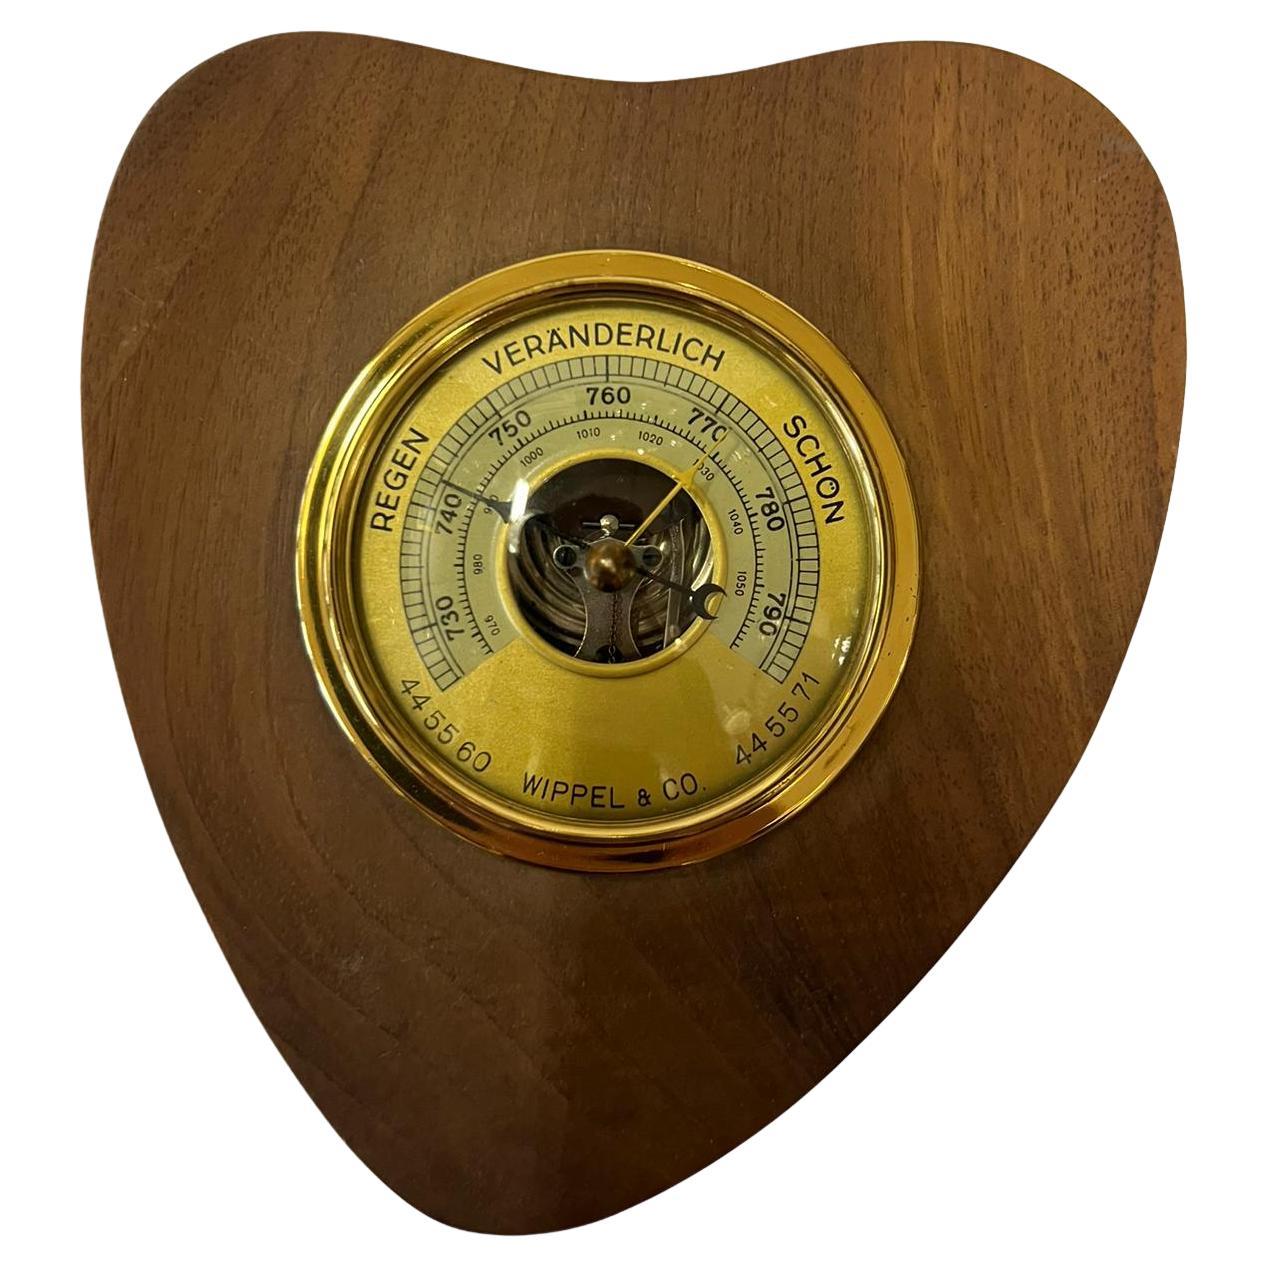 Austrian Vintage Barometer in Heart Shape by Wippel & co For Sale 3